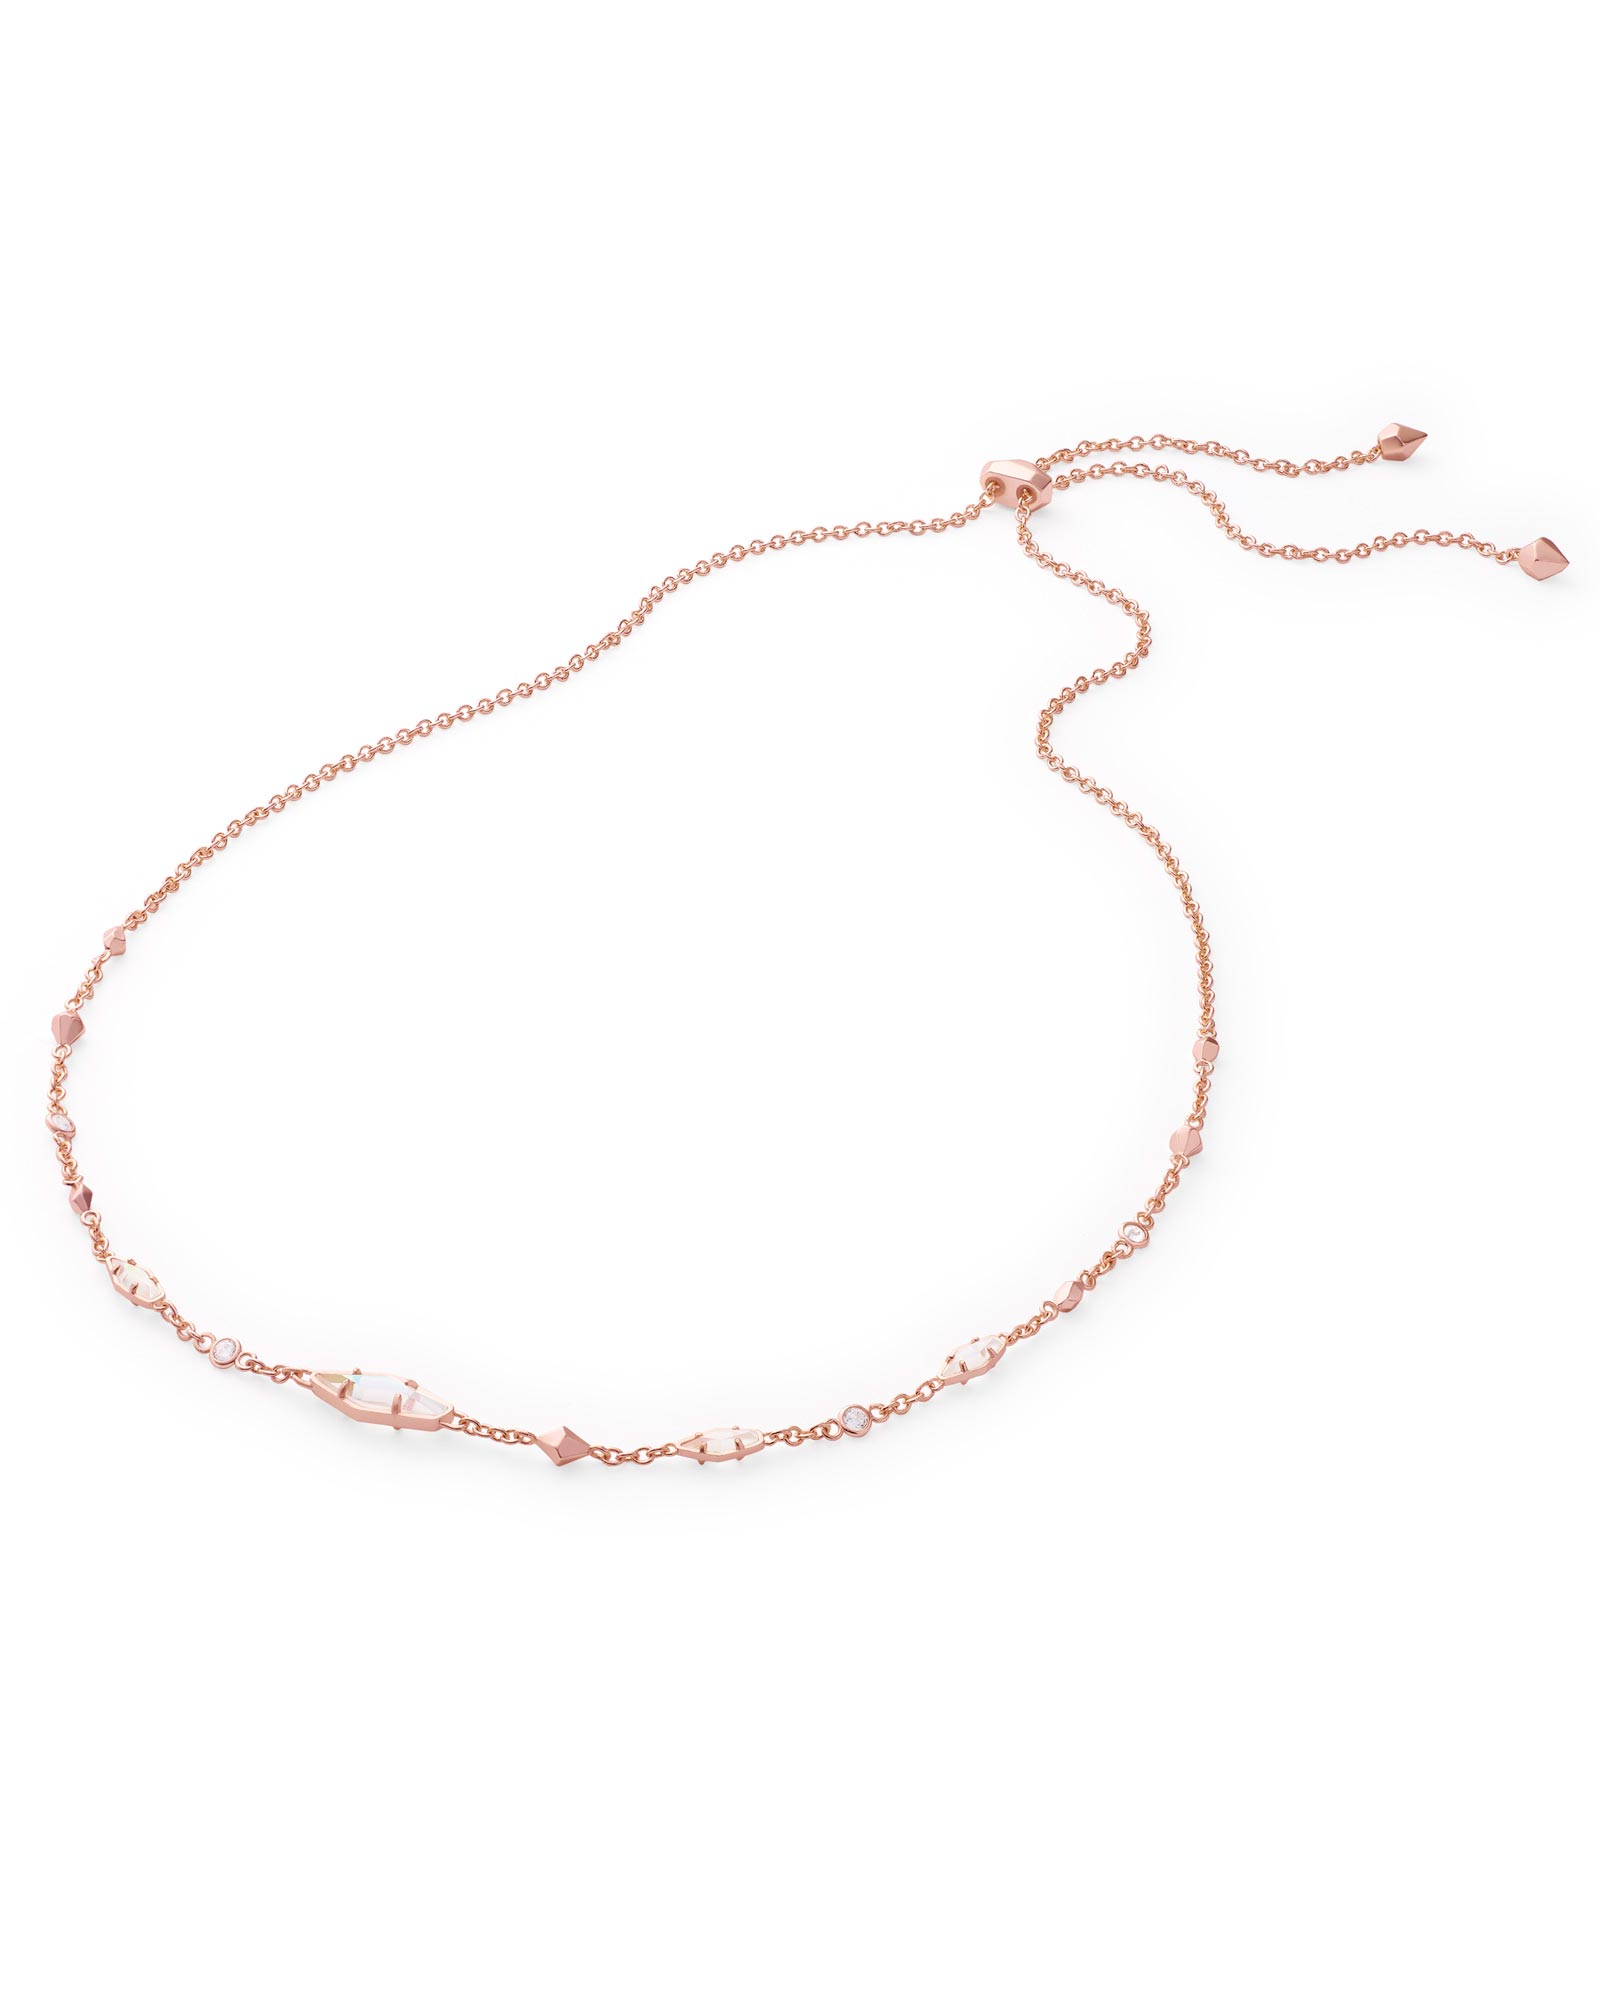 Debra Rose Gold Choker Necklace in Iridescent | Kendra Scott